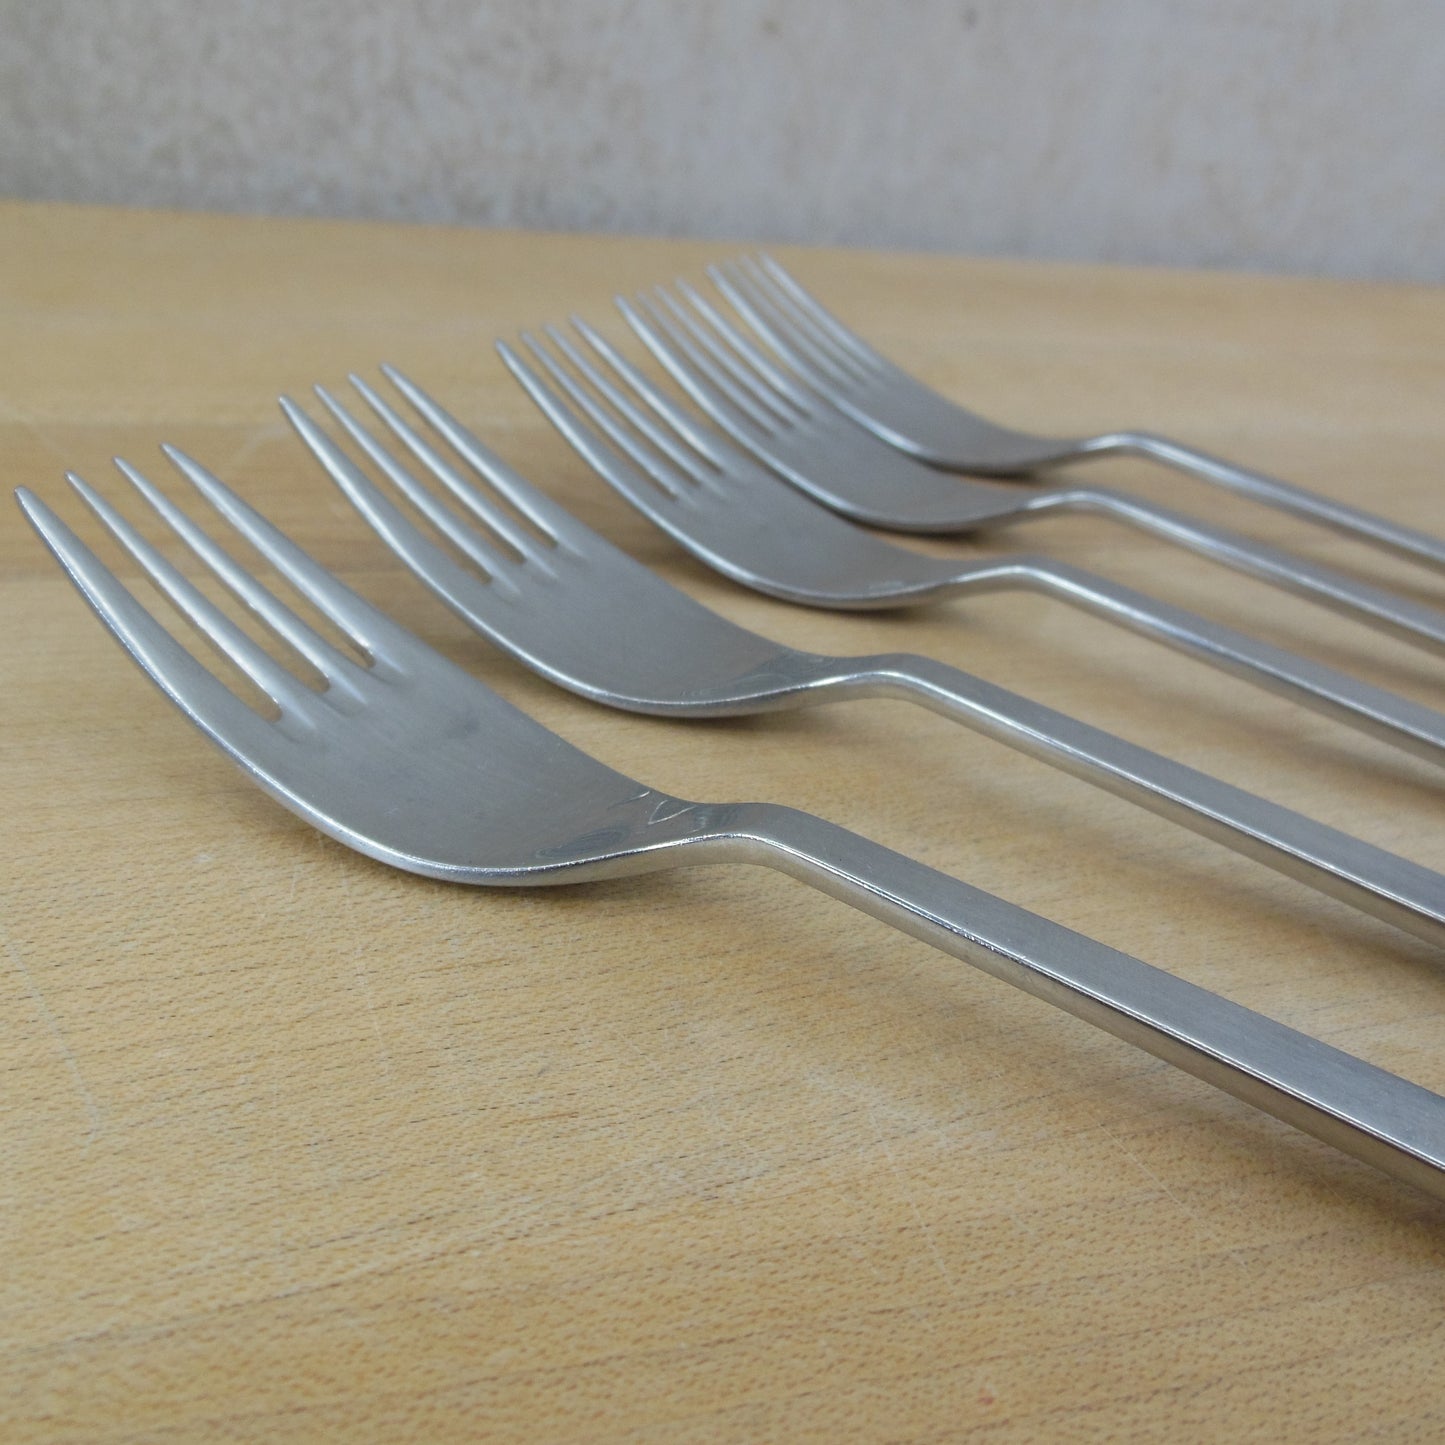 Towle Supreme Cutlery Koreas Lucerne Stainless Salad Forks - 5 Set vintage